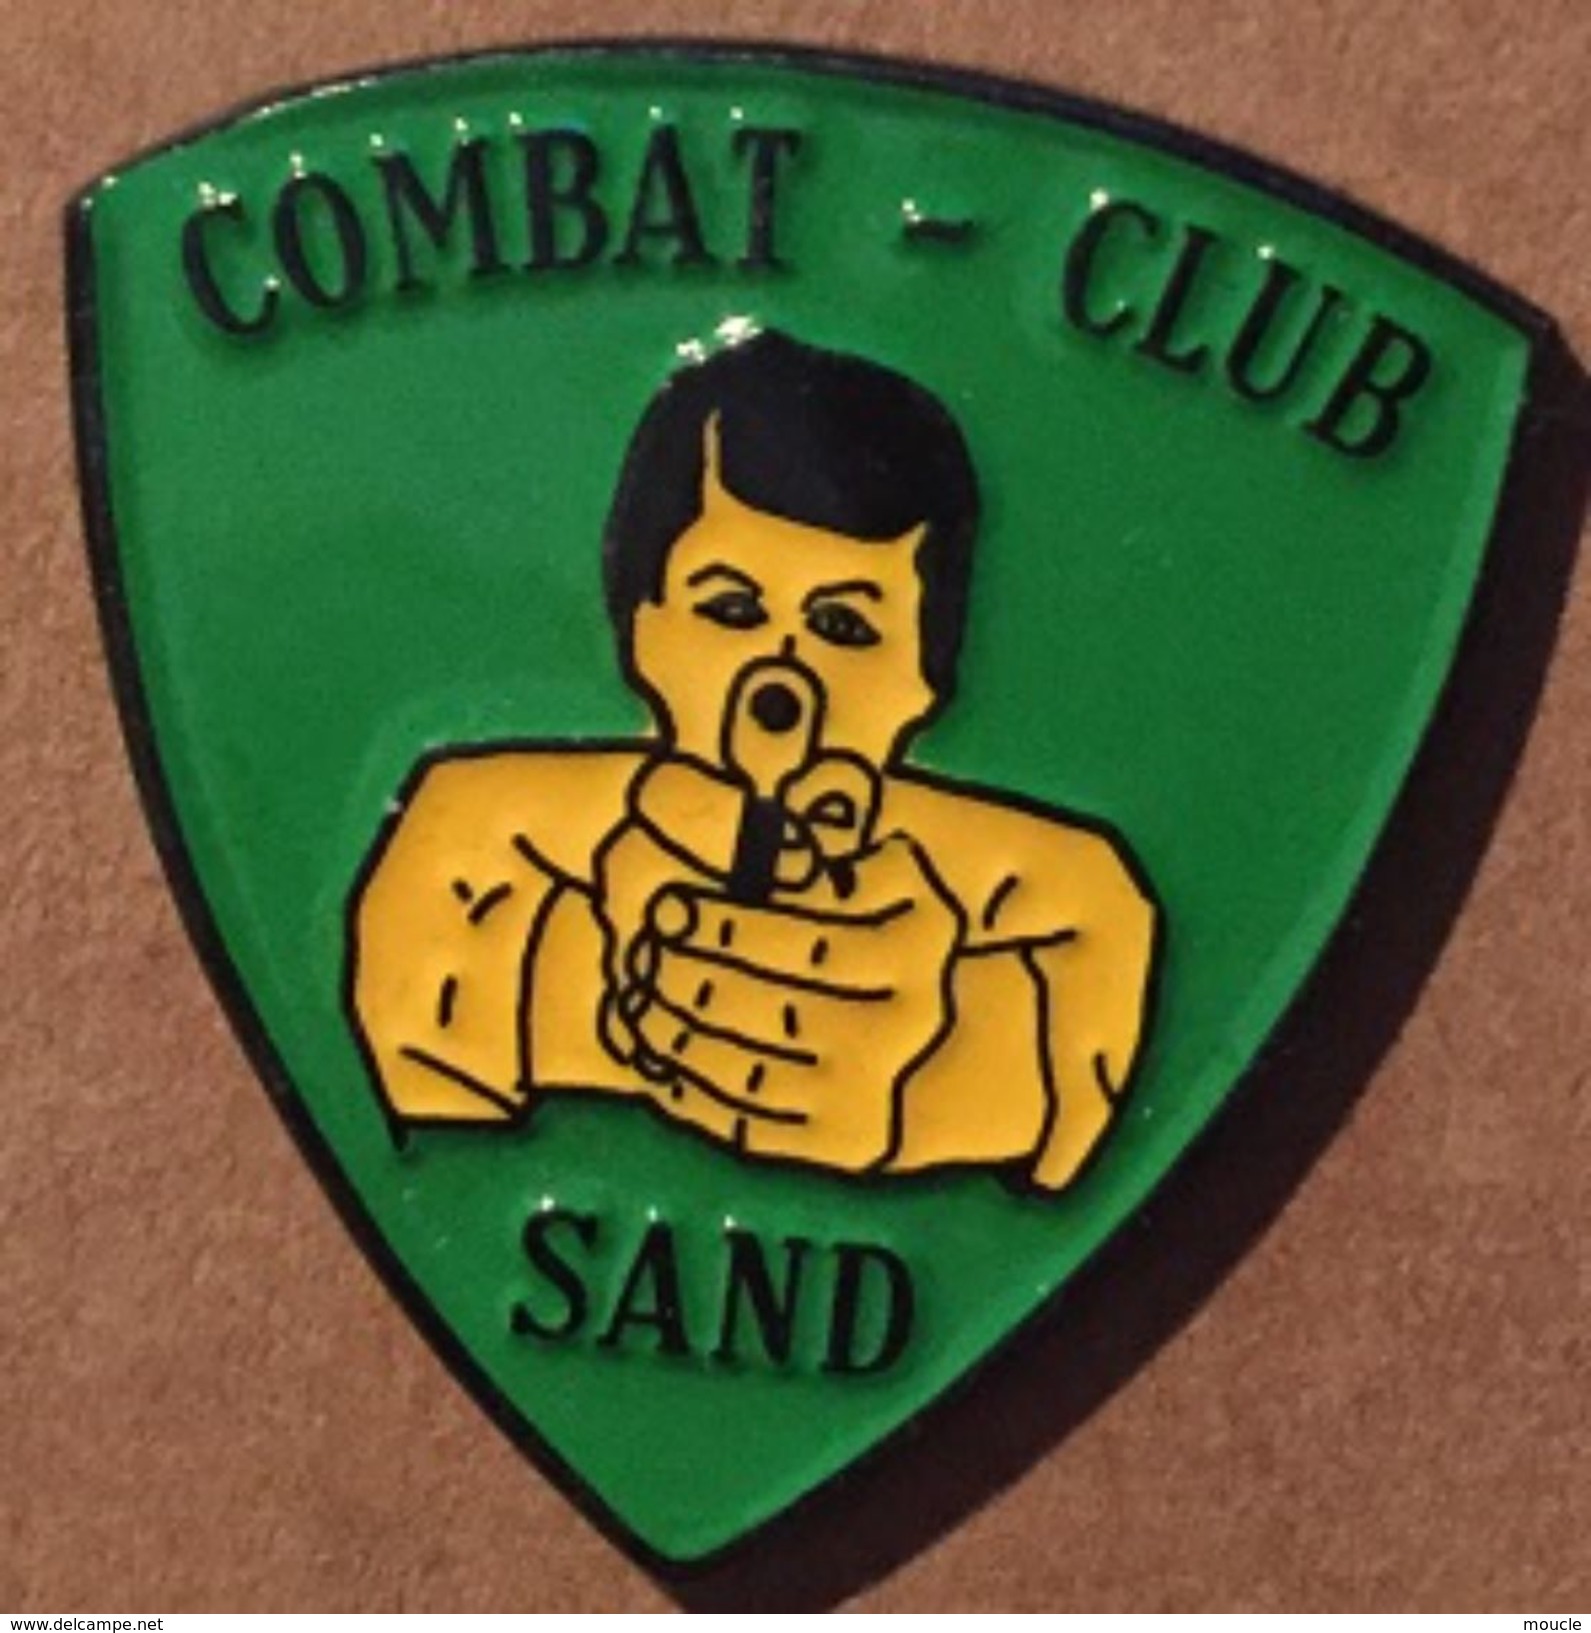 COMBAT - CLUB - SAND - ARME - GUN - PISTOLET -            (19) - Police